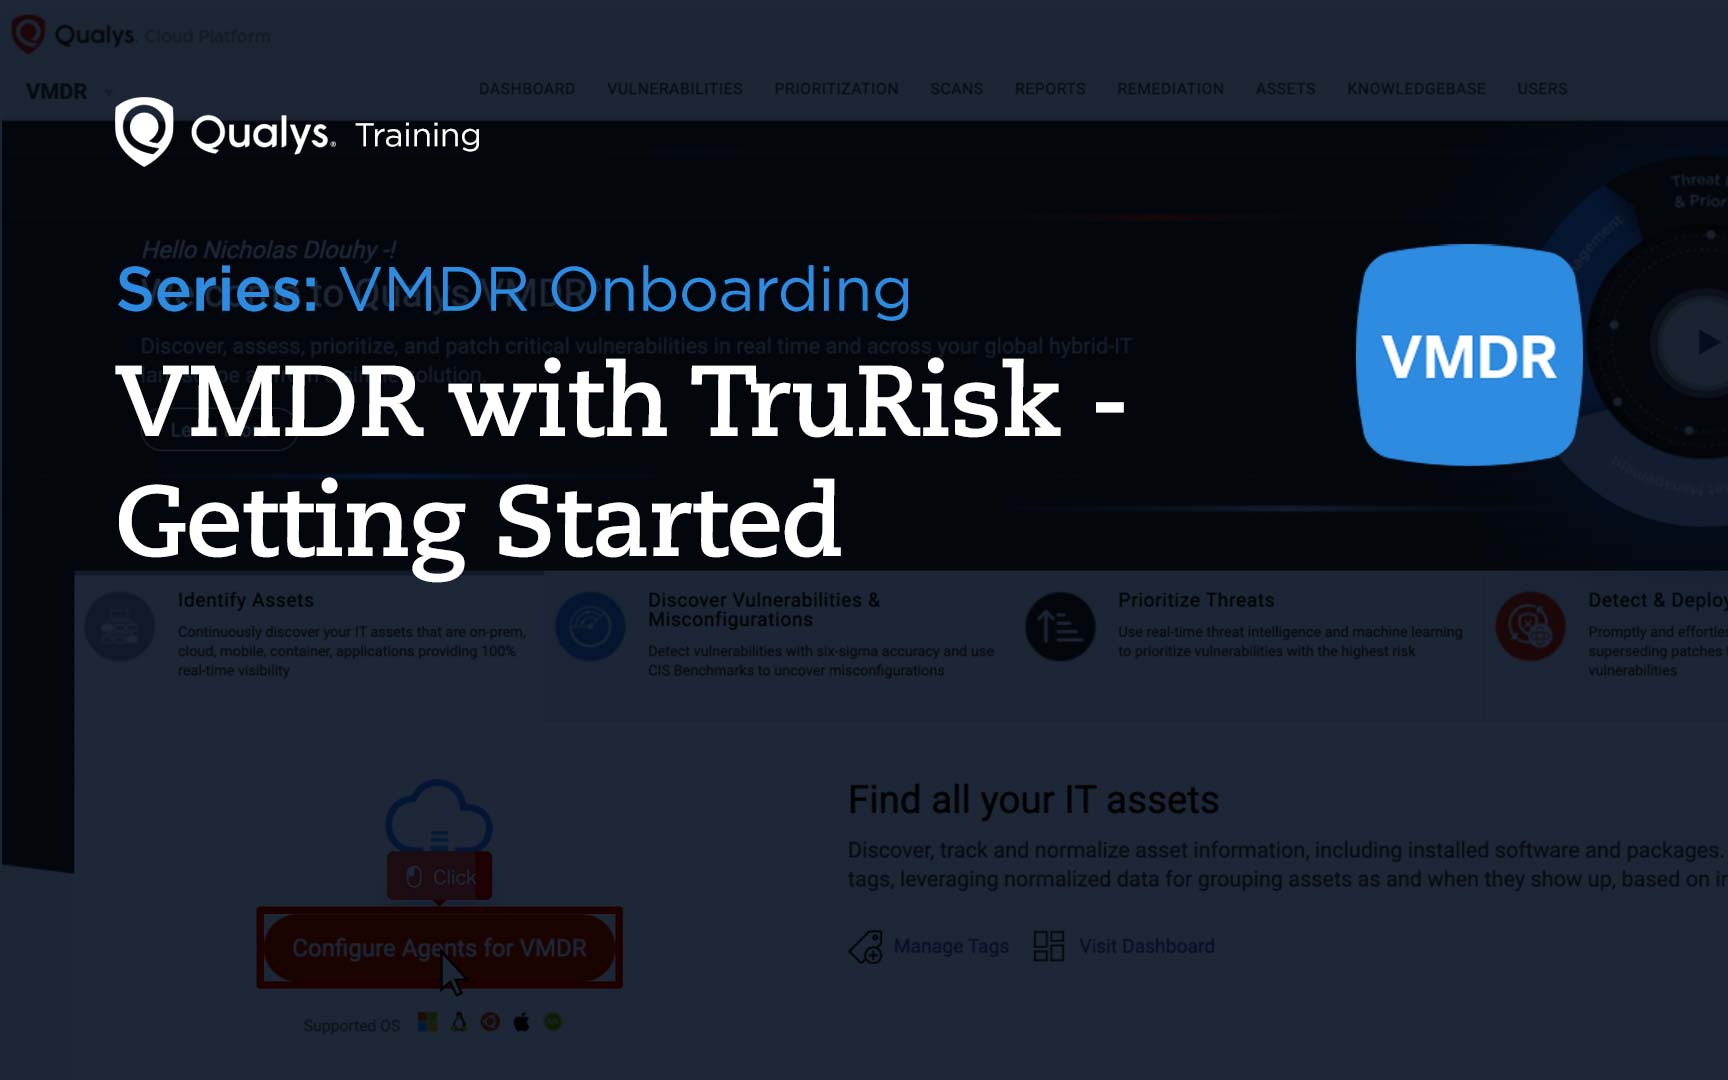 VMDR with TruRisk - Getting Started